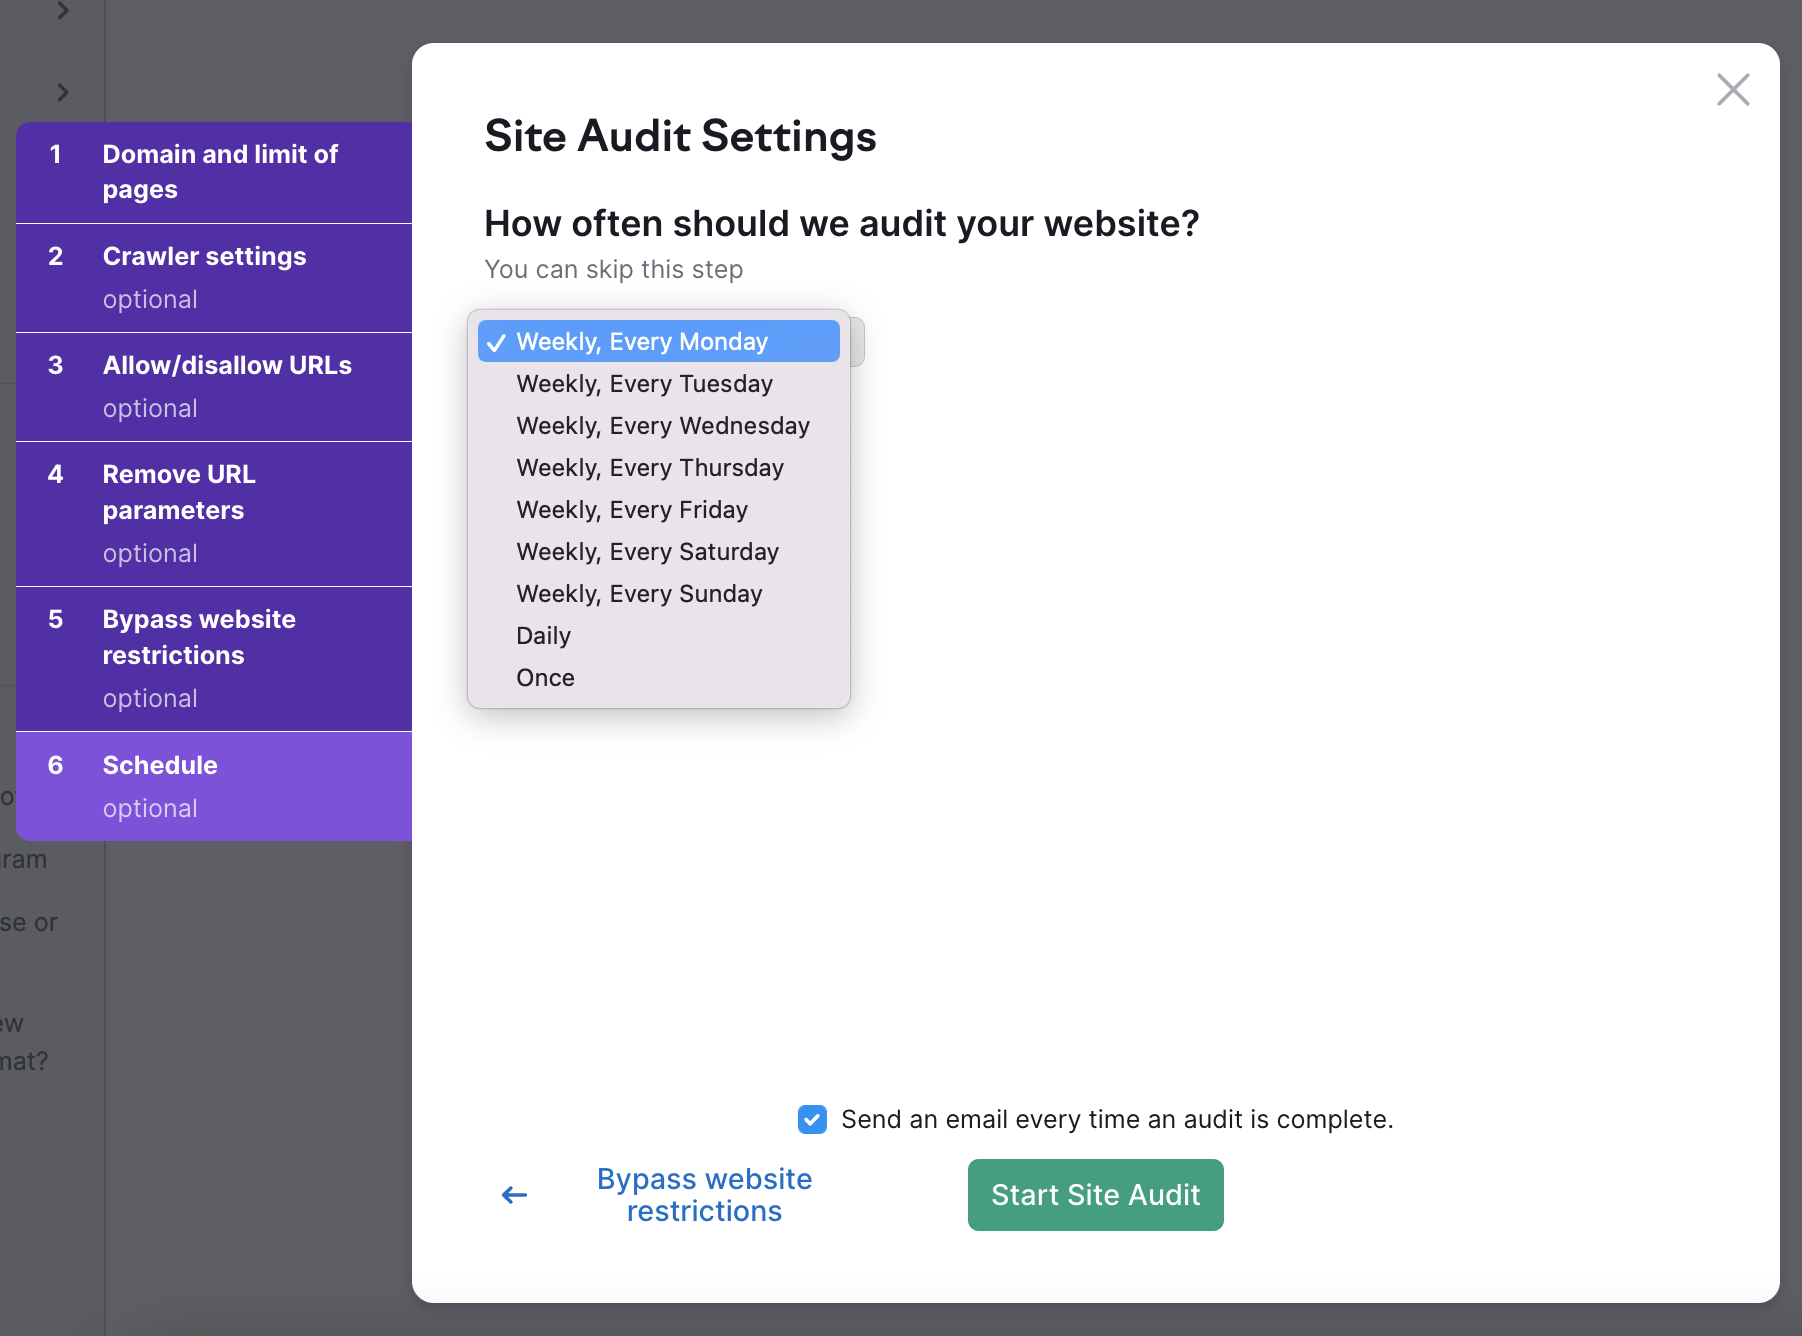 Site Audit schedule settings